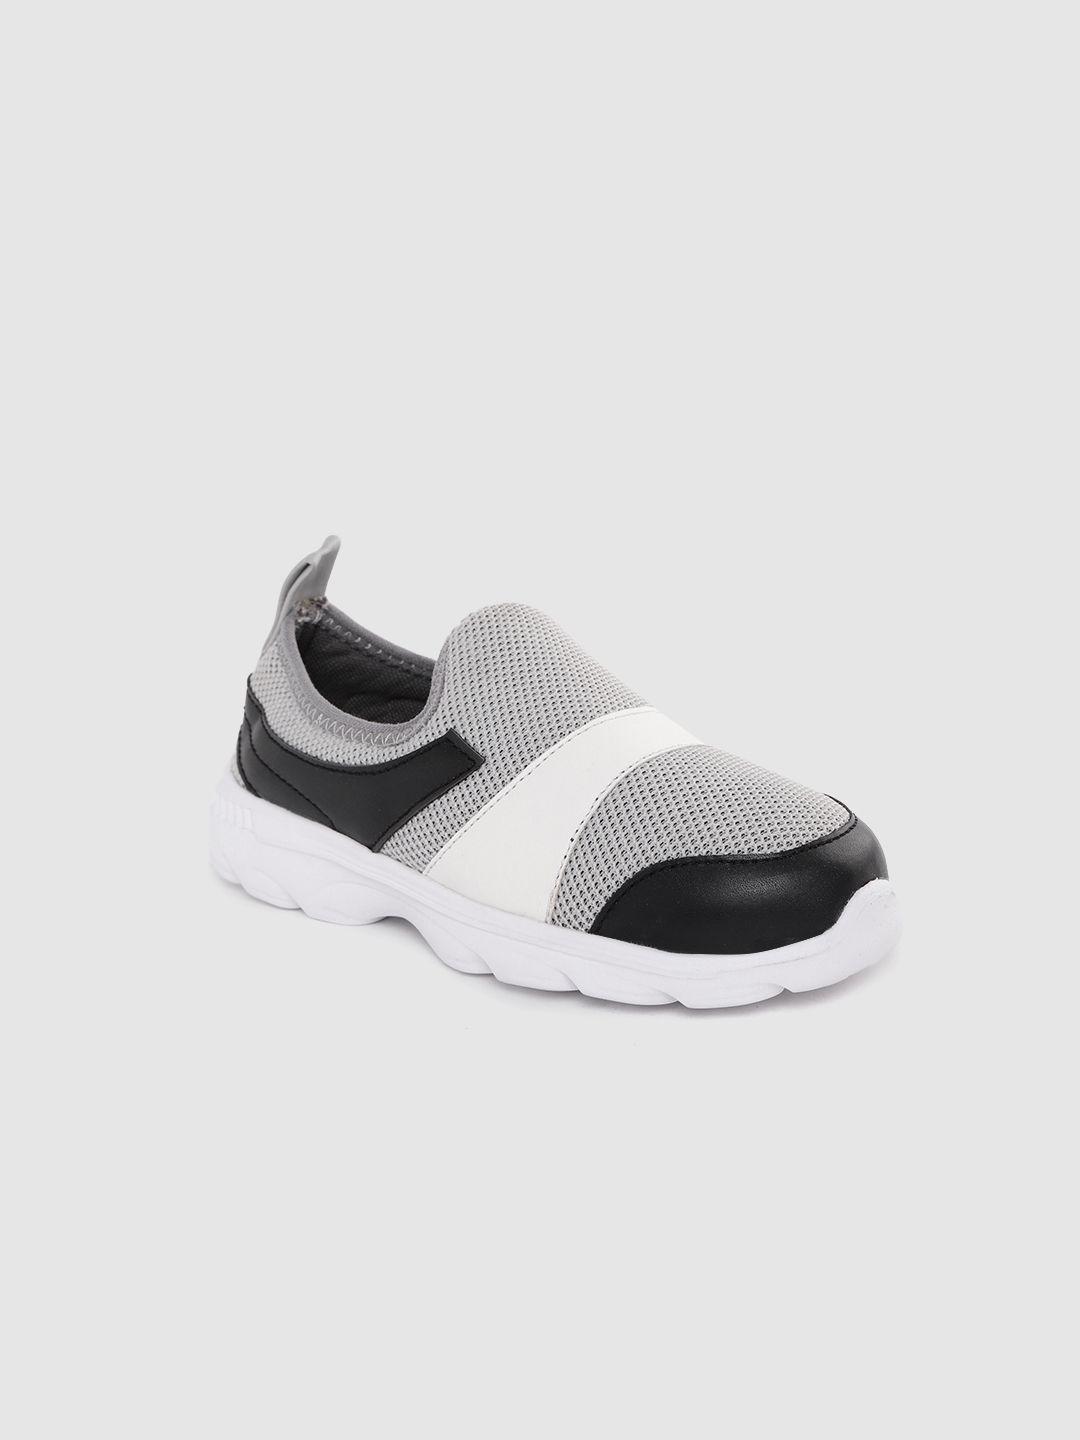 yk boys grey & black colourblocked slip-on sneakers